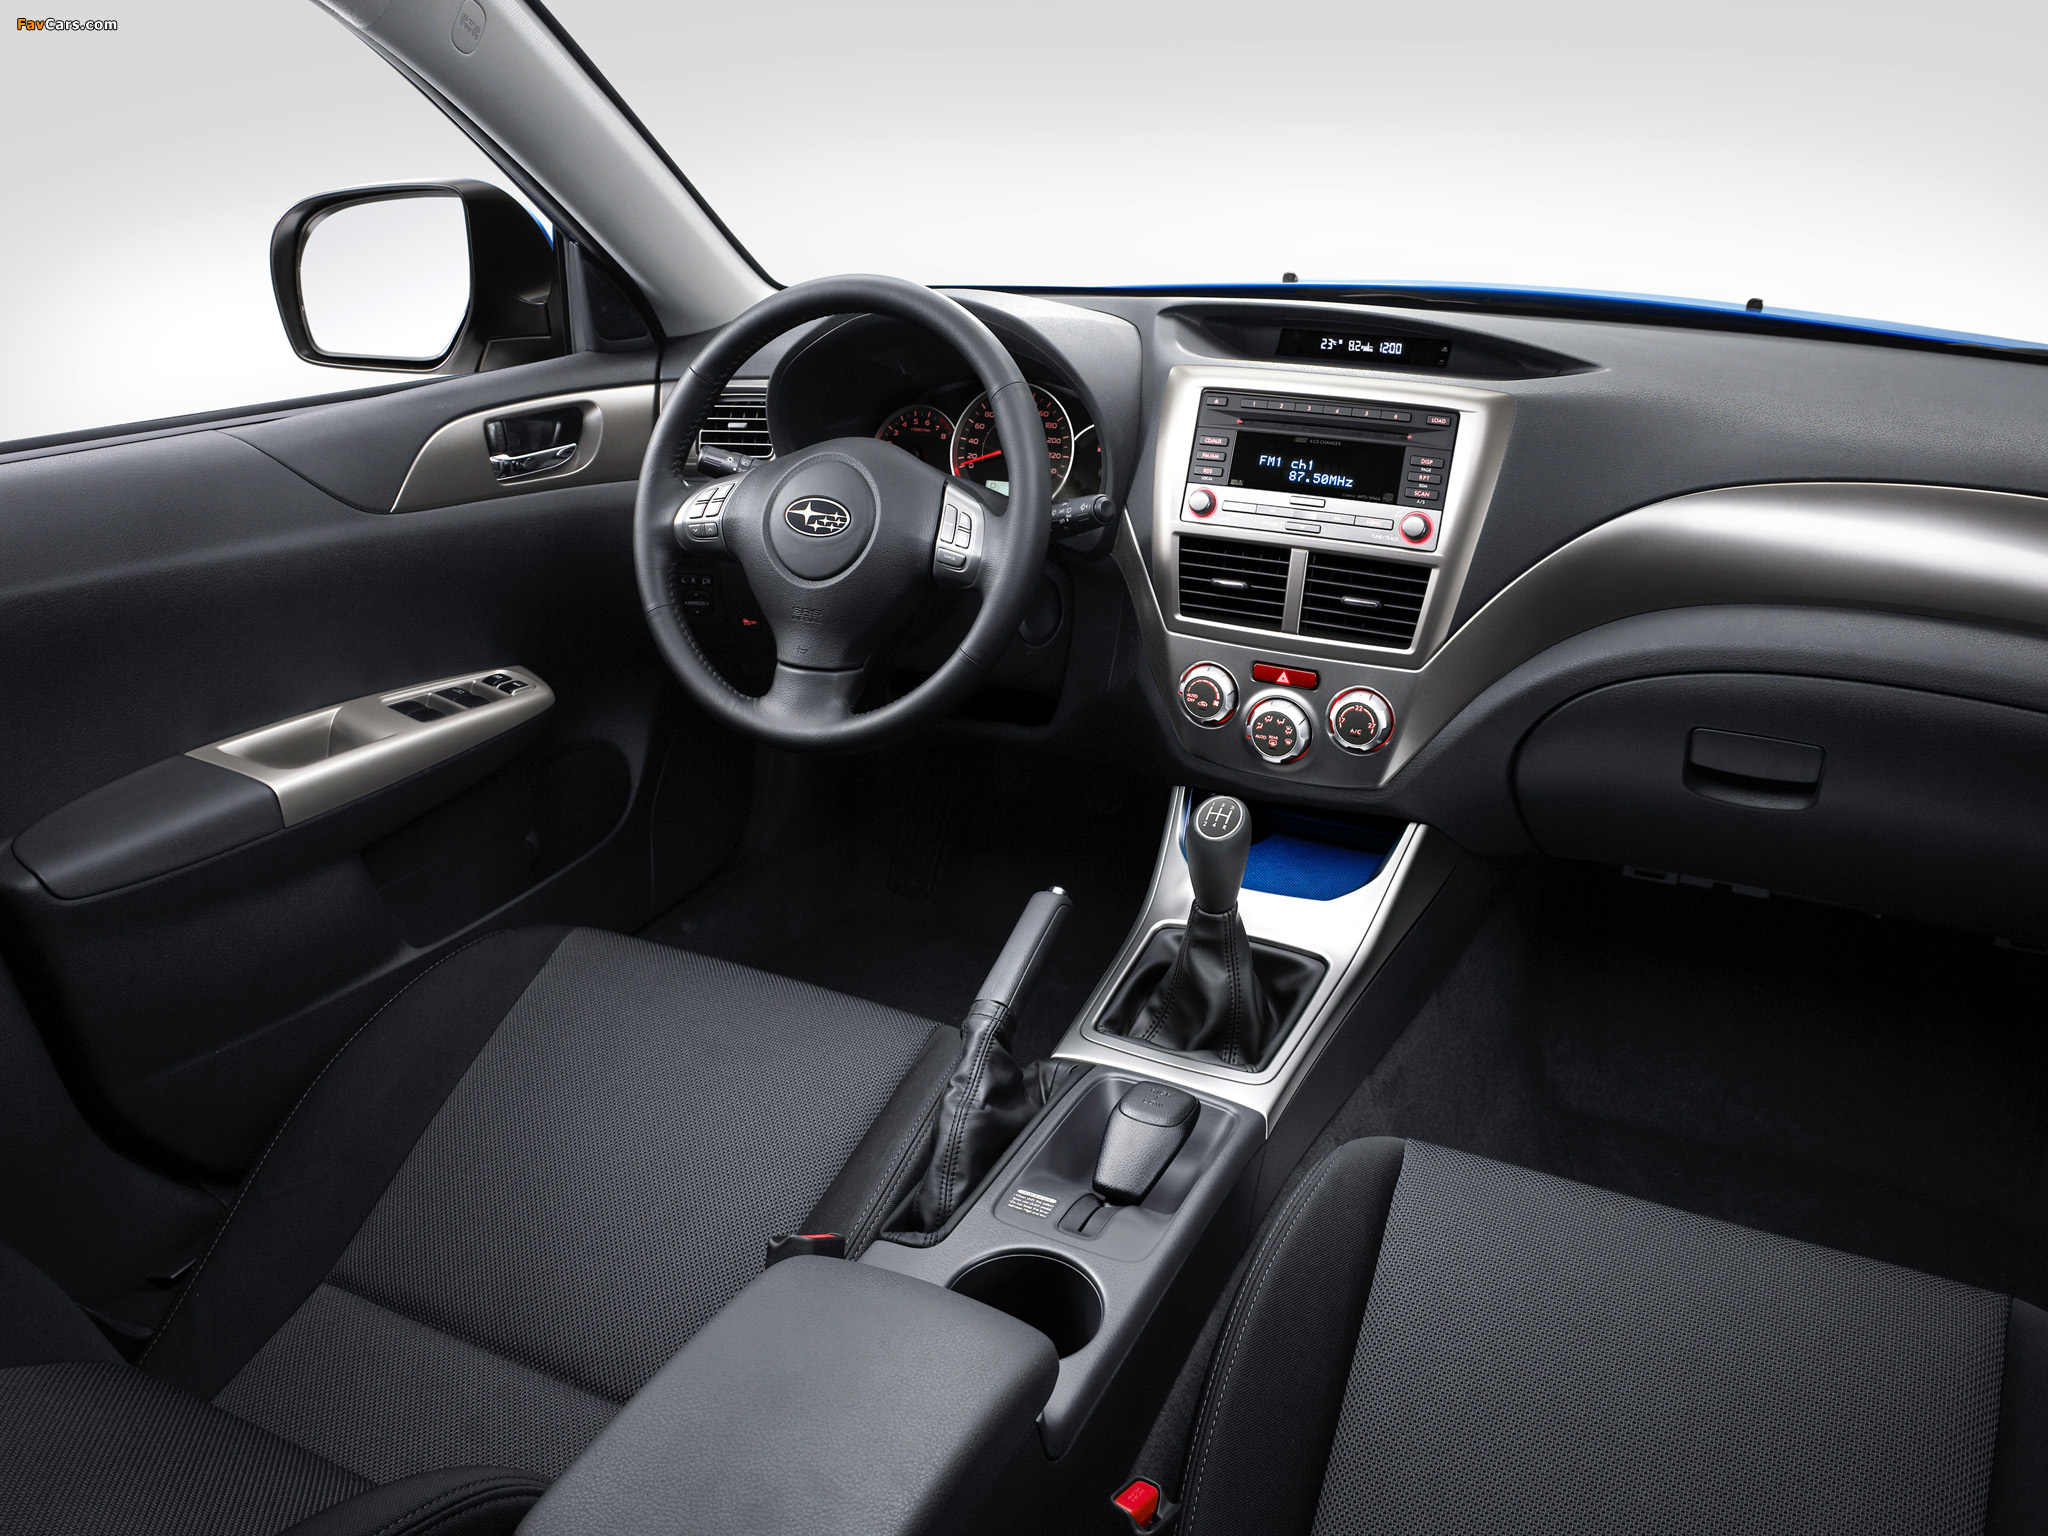 Subaru Impreza 2.0R Hatchback (GH) 2007 images (2048 x 1536)